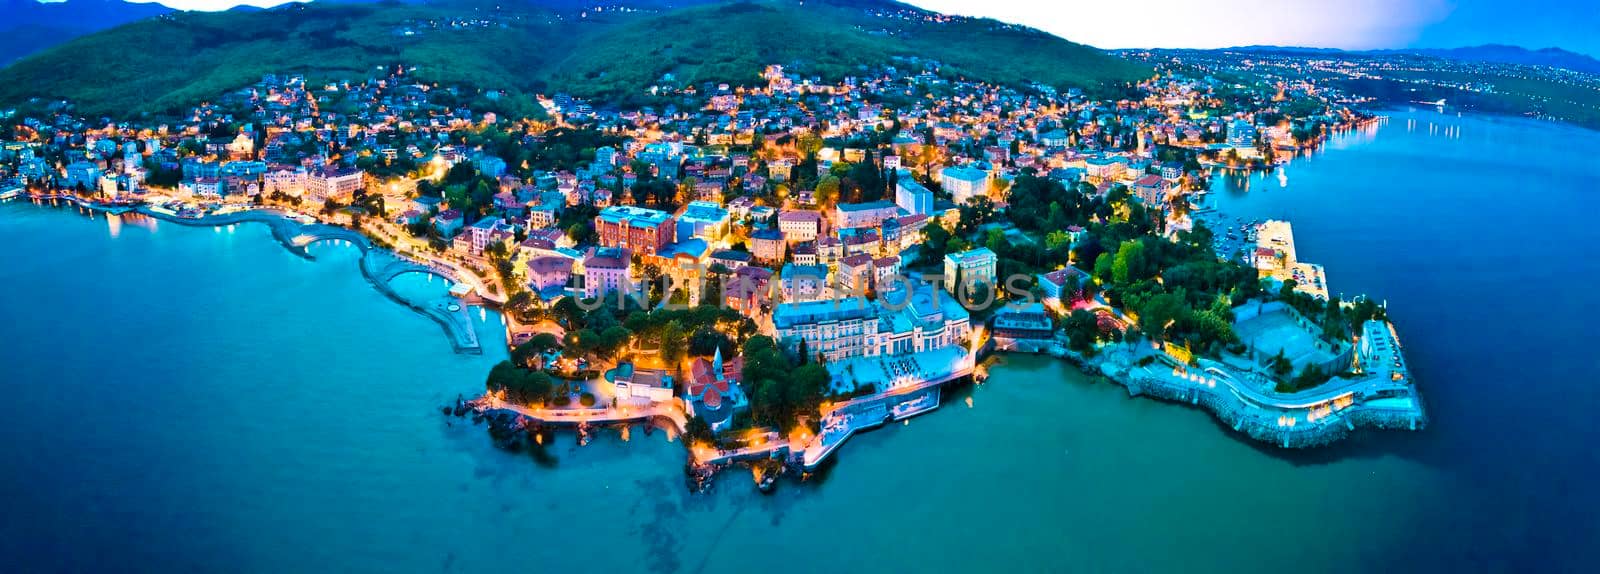 Town of Opatija aerial panoramic night view by xbrchx